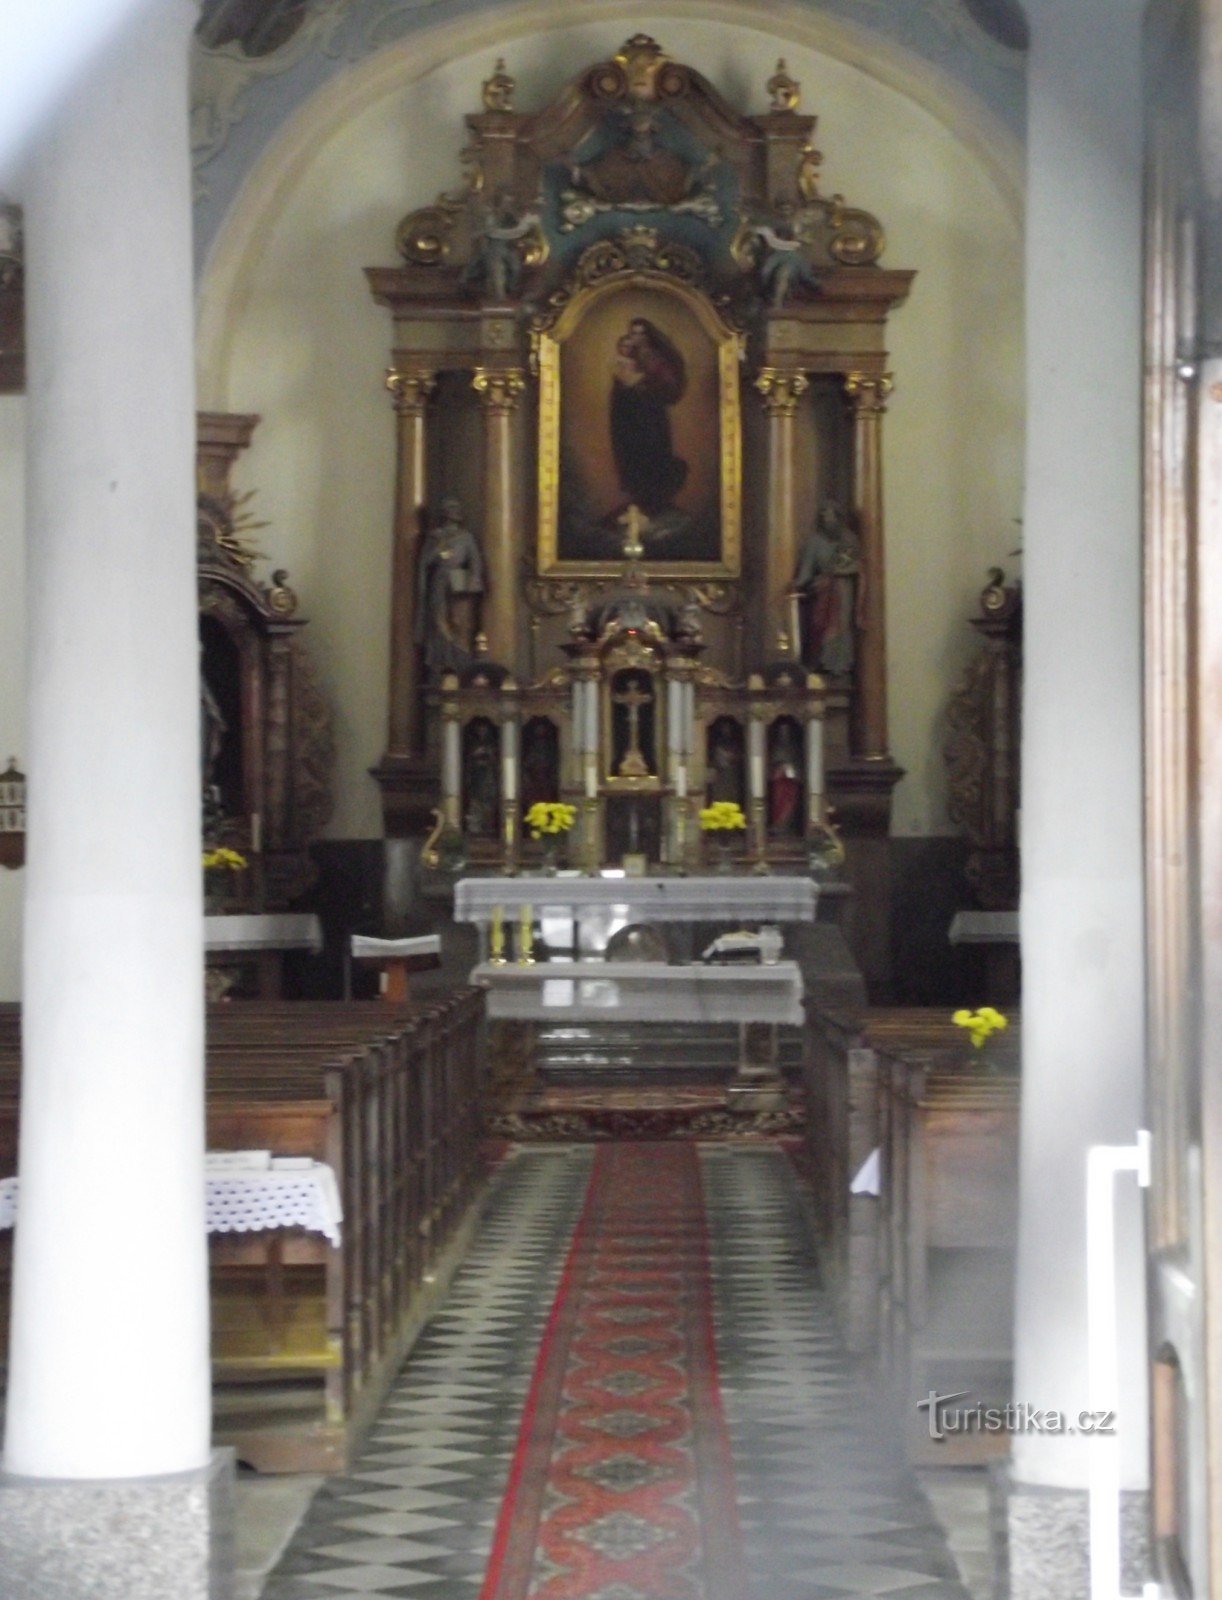 interior with main altar